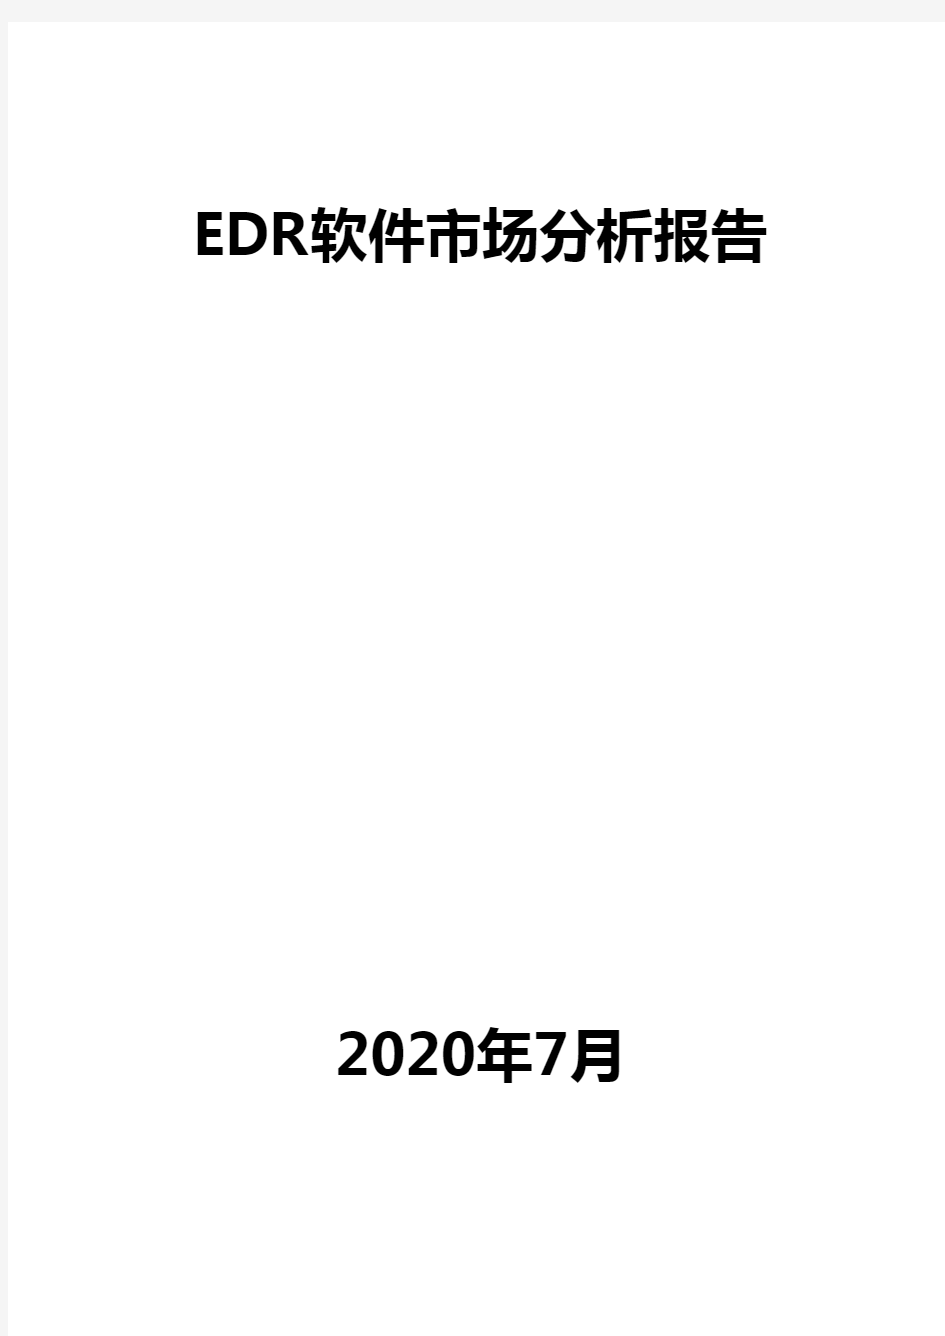 EDR软件市场分析报告